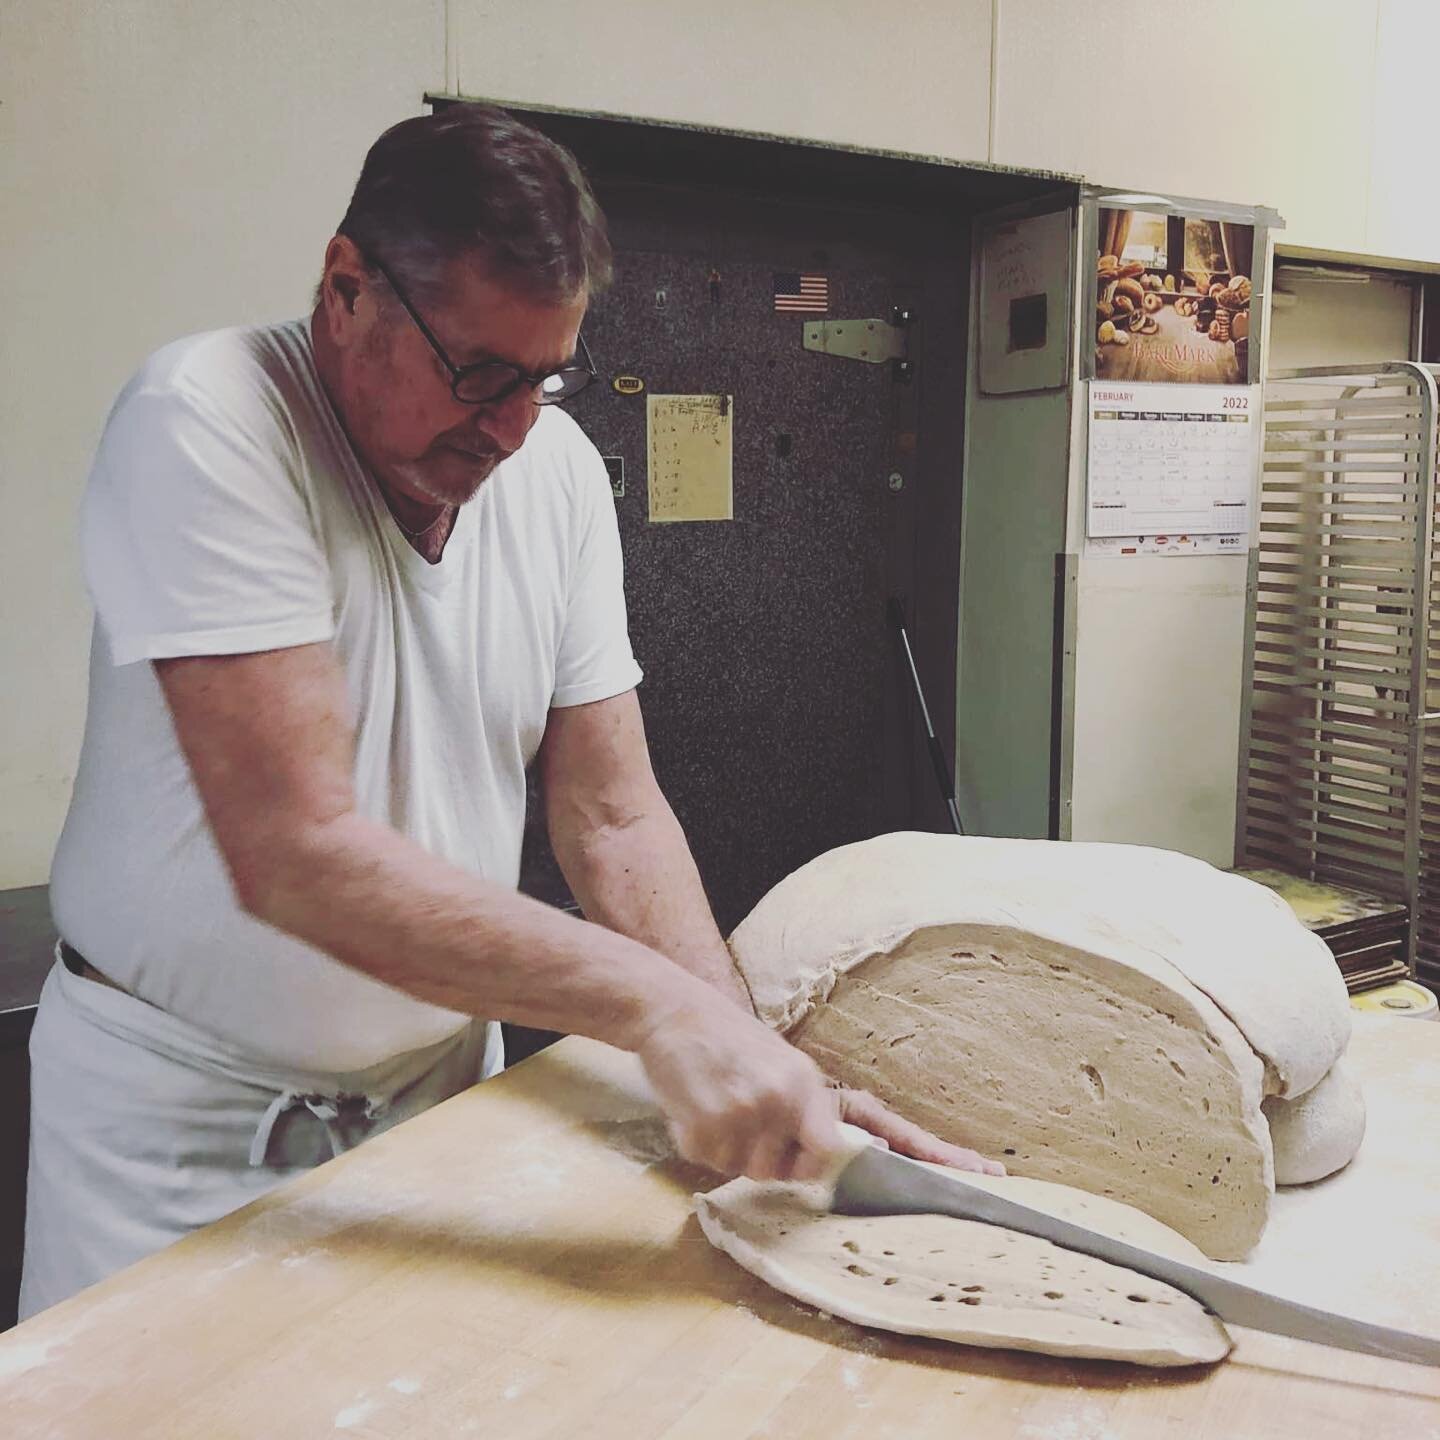 &ldquo;Prepare to meet thy baker!&rdquo; Meet Stuart, The Bagel Man. Serving Sonoma fresh bagels for over 40 years! #homegrownbagels #thebagelshop #sonomalocal